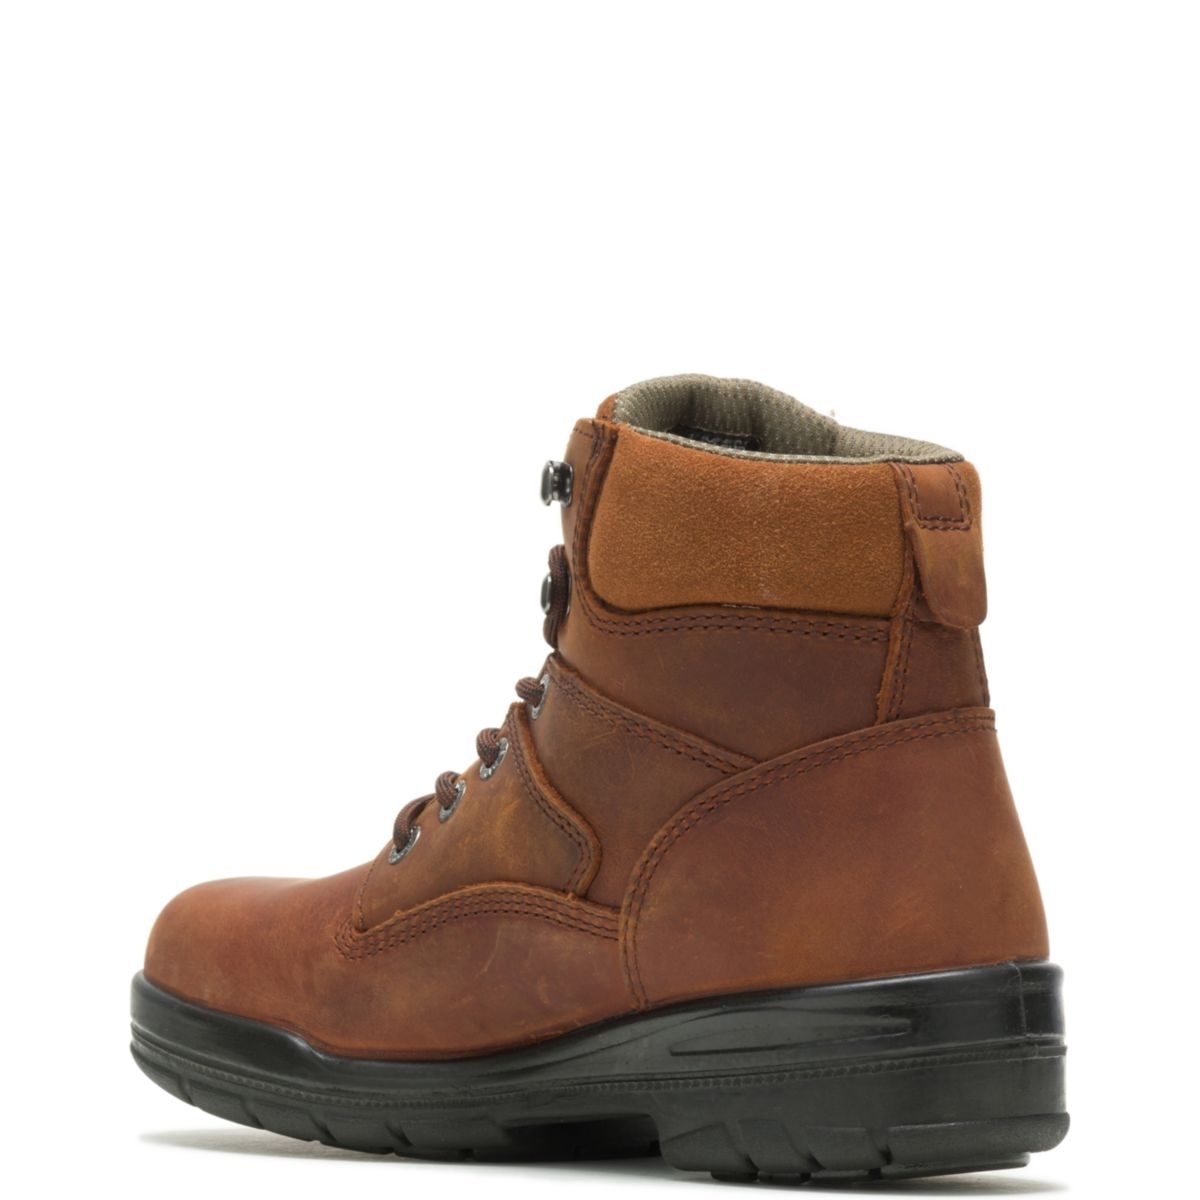 WOLVERINE Men's 6 DuraShocksÂ® Slip Resistant Steel Toe Work Boot Canyon - W02053 BRN/STL - BRN/STL, 8.5-M